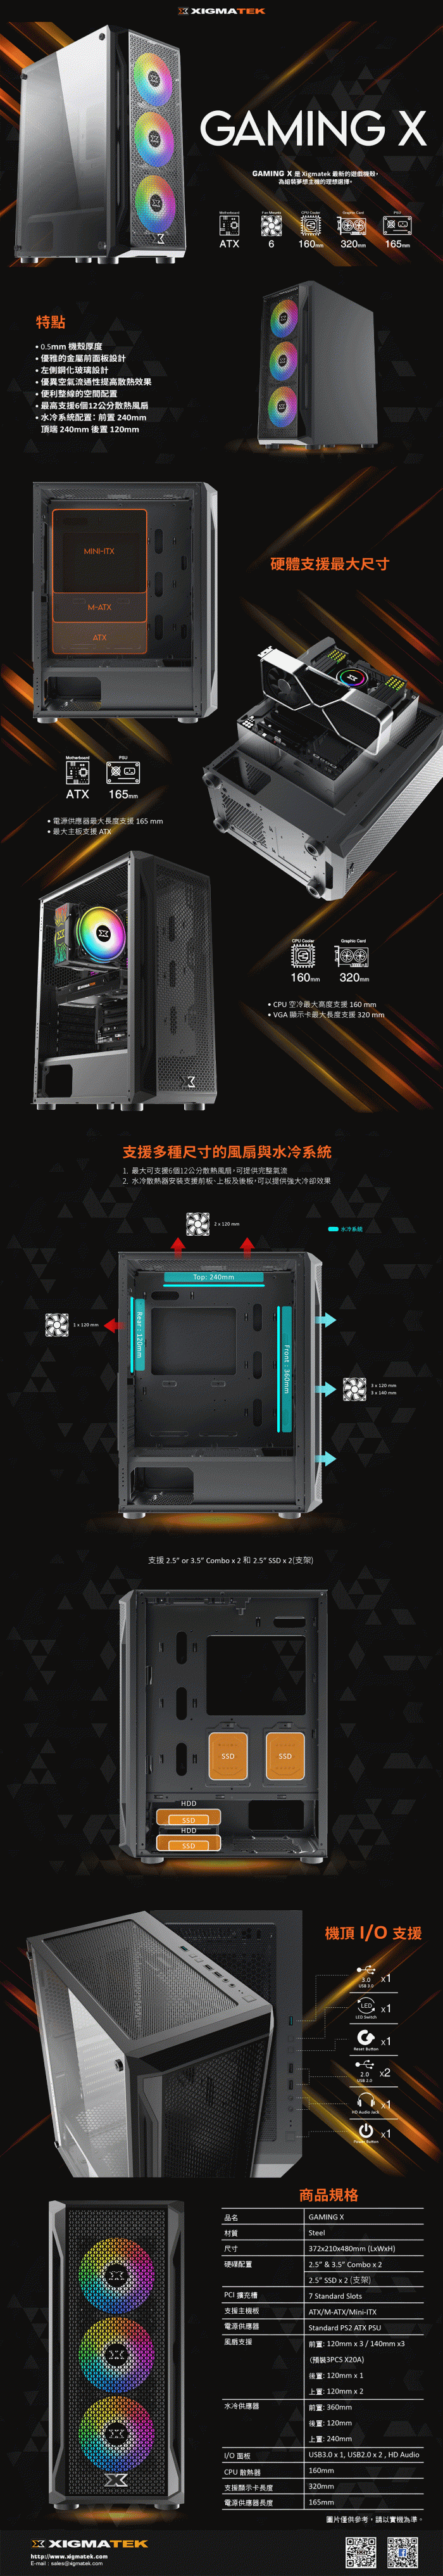 Xigmatek Gaming X ARGB 金屬網孔面板 熱銷款 (可加購X20A ARGB風扇 @100)